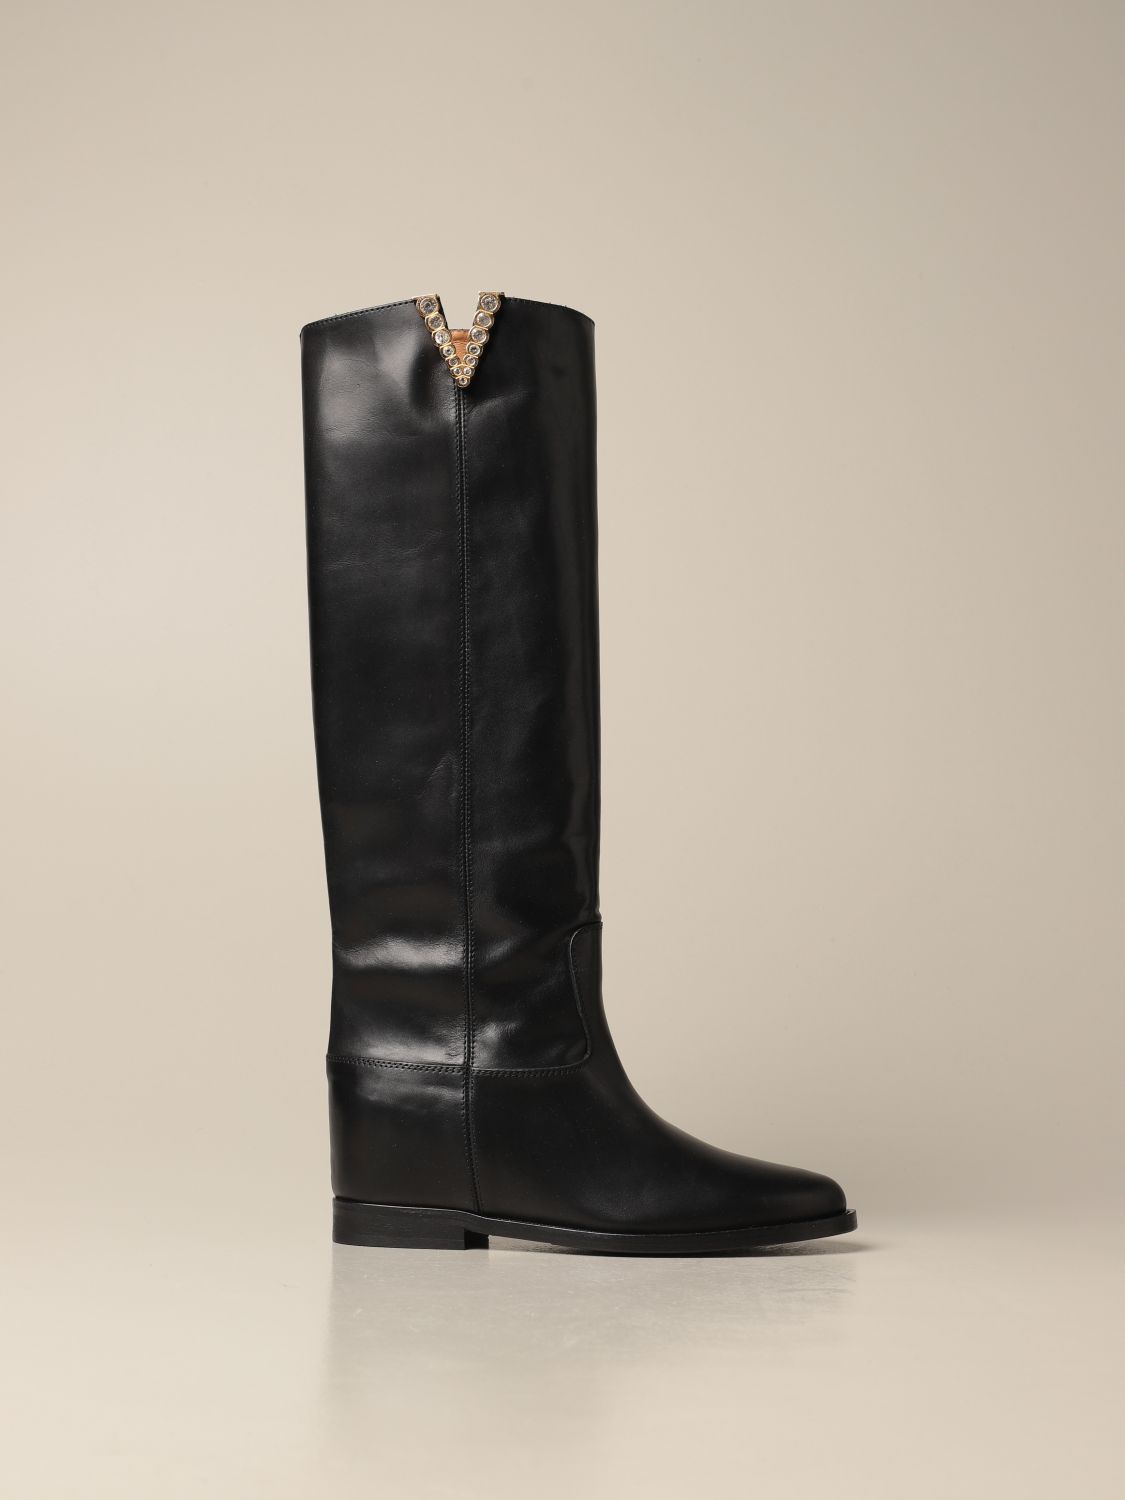 krijgen thuis half acht VIA ROMA 15: Saint Barth leather boot - Black | Via Roma 15 boots 3399  online on GIGLIO.COM